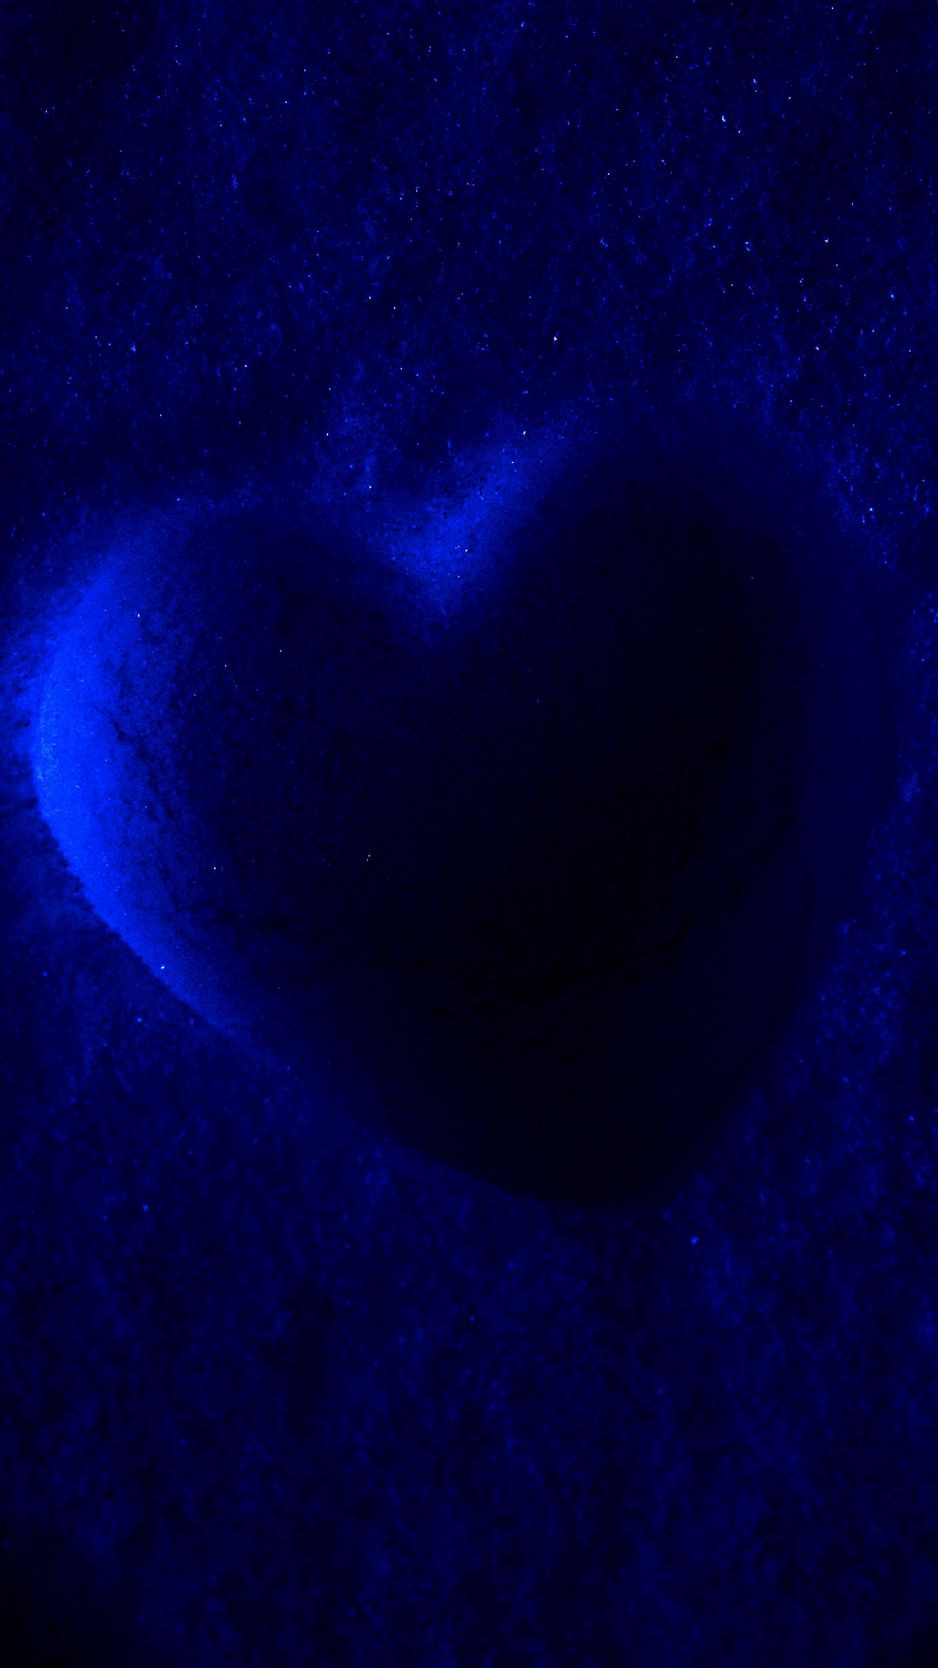 Light Blue Heart Wallpaper for iPhone Free PNG ImageIllustoon